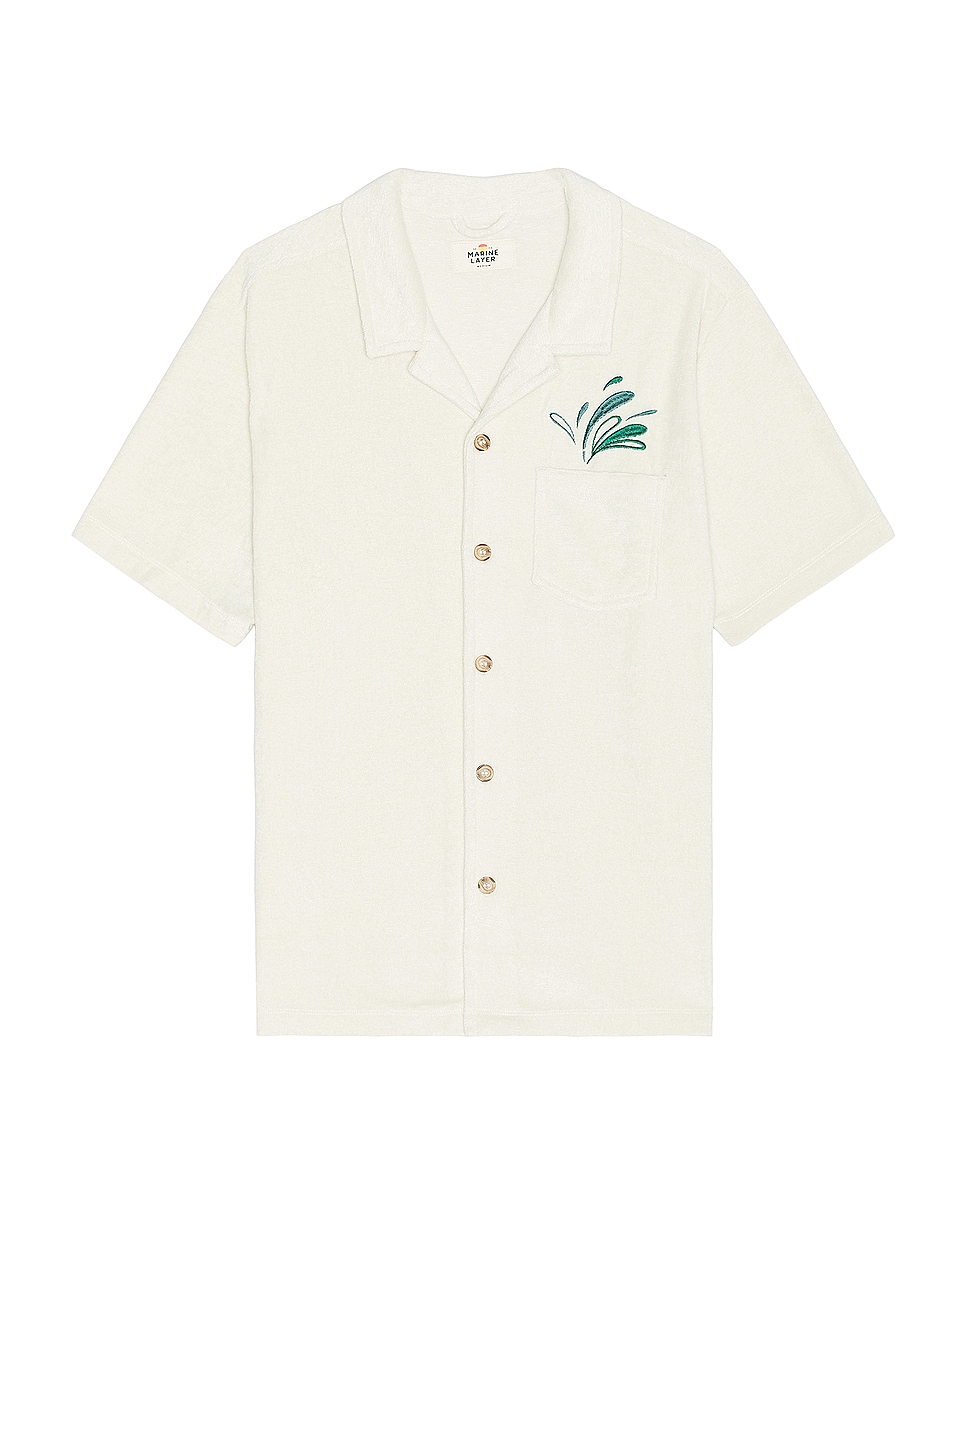 Marine Layer Resort Short Sleeve Terry Out Resort Shirt in Natural Splash  Graphic